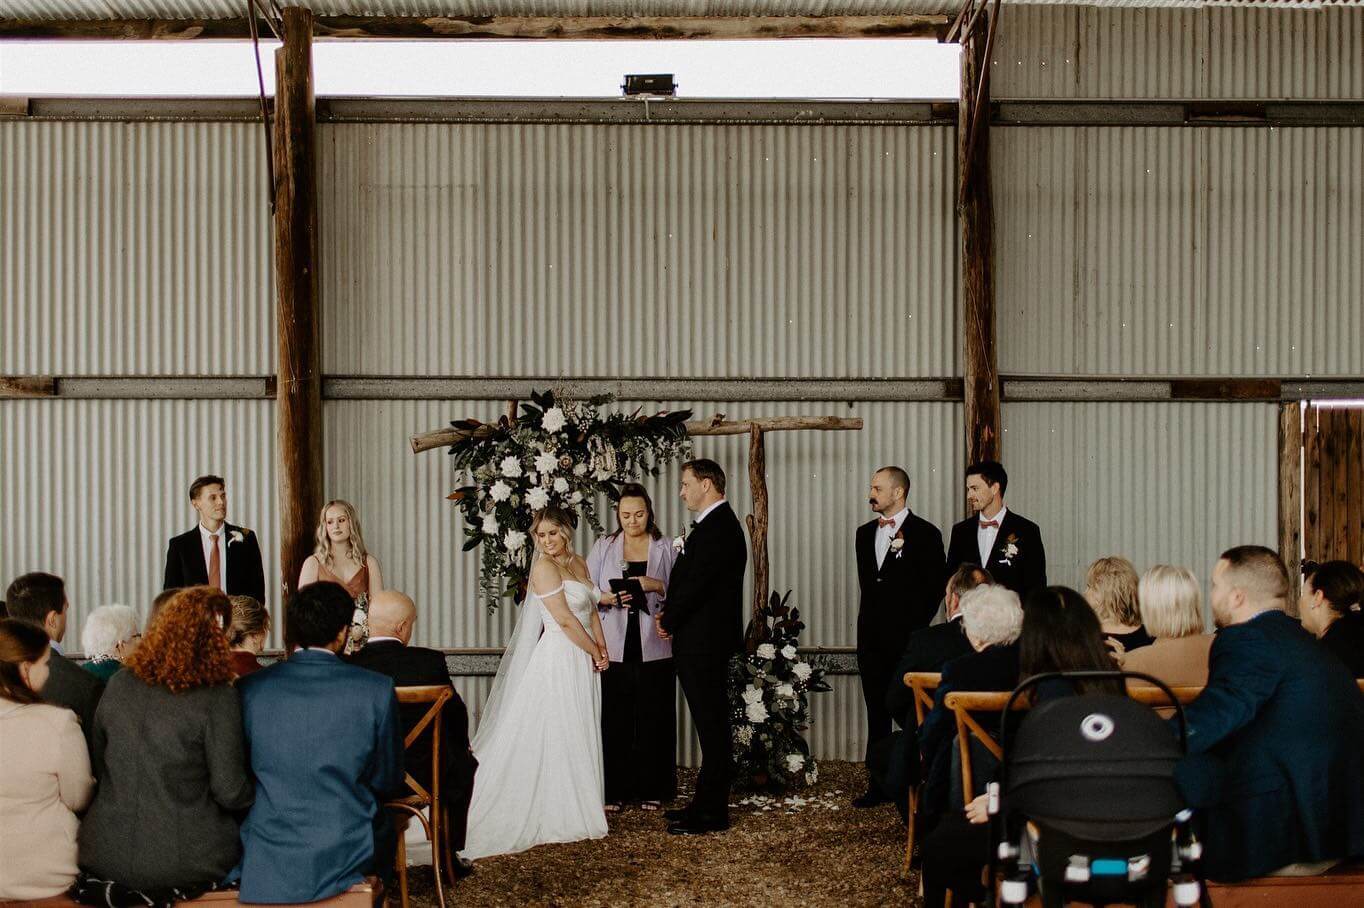 Best-rustic-country-wedding-venues-in-australia-BoxGrove-NSW-photo-@tillyrobertsphoto